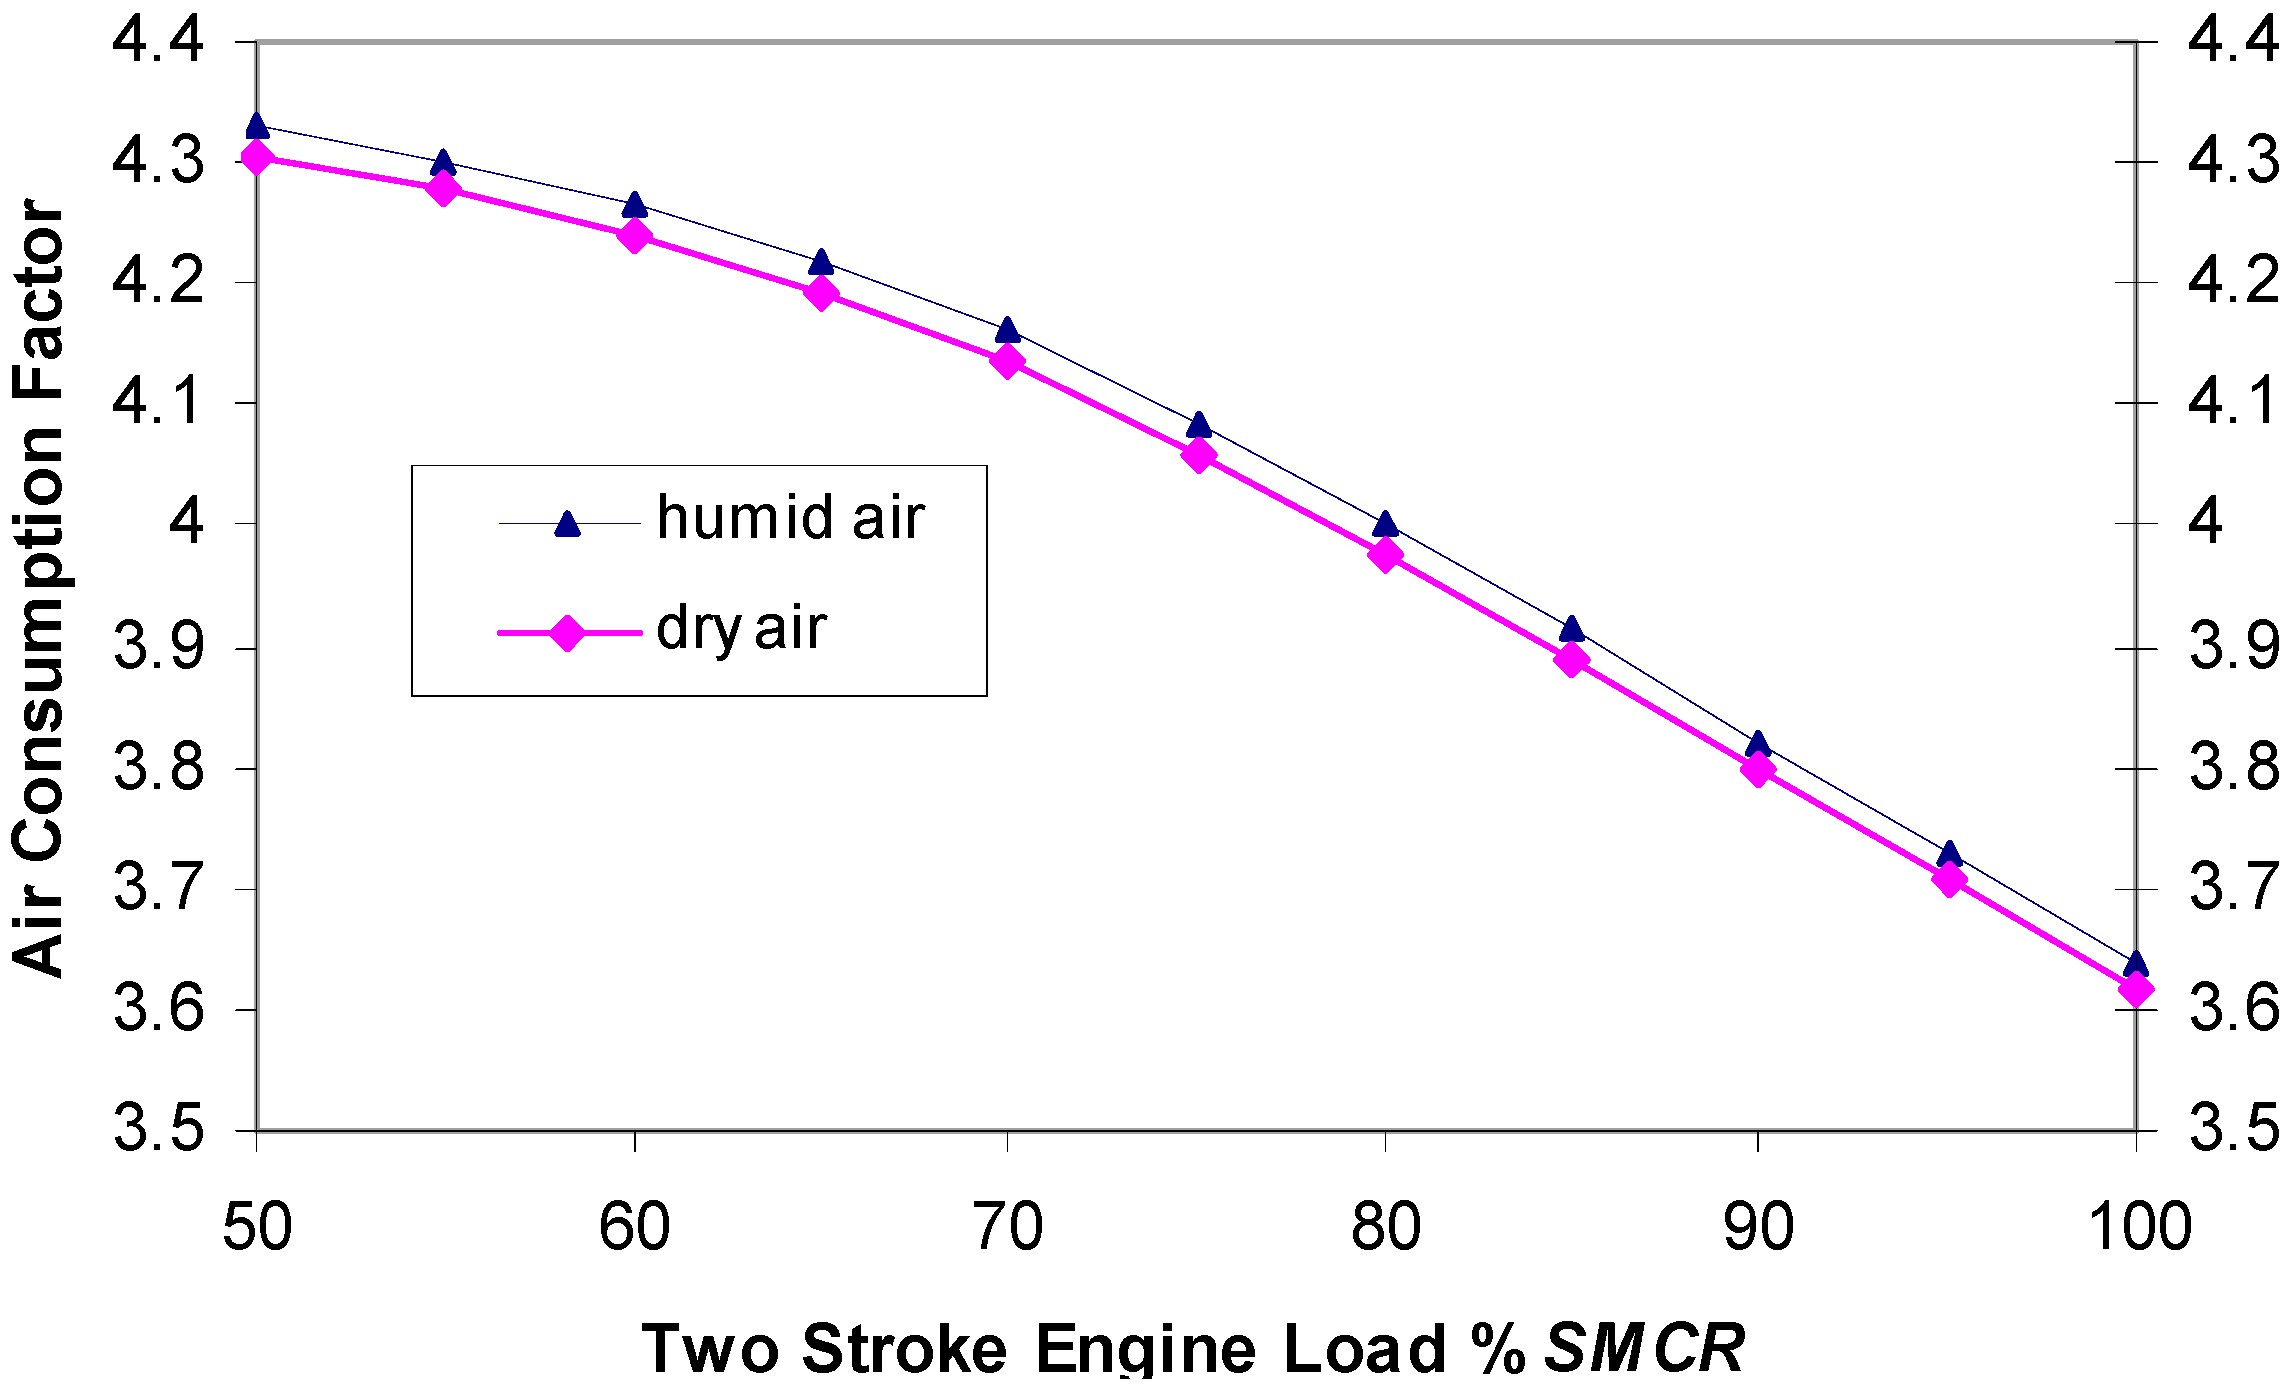 2 Stroke Engine Pv Diagram Energies Free Full Text Of 2 Stroke Engine Pv Diagram